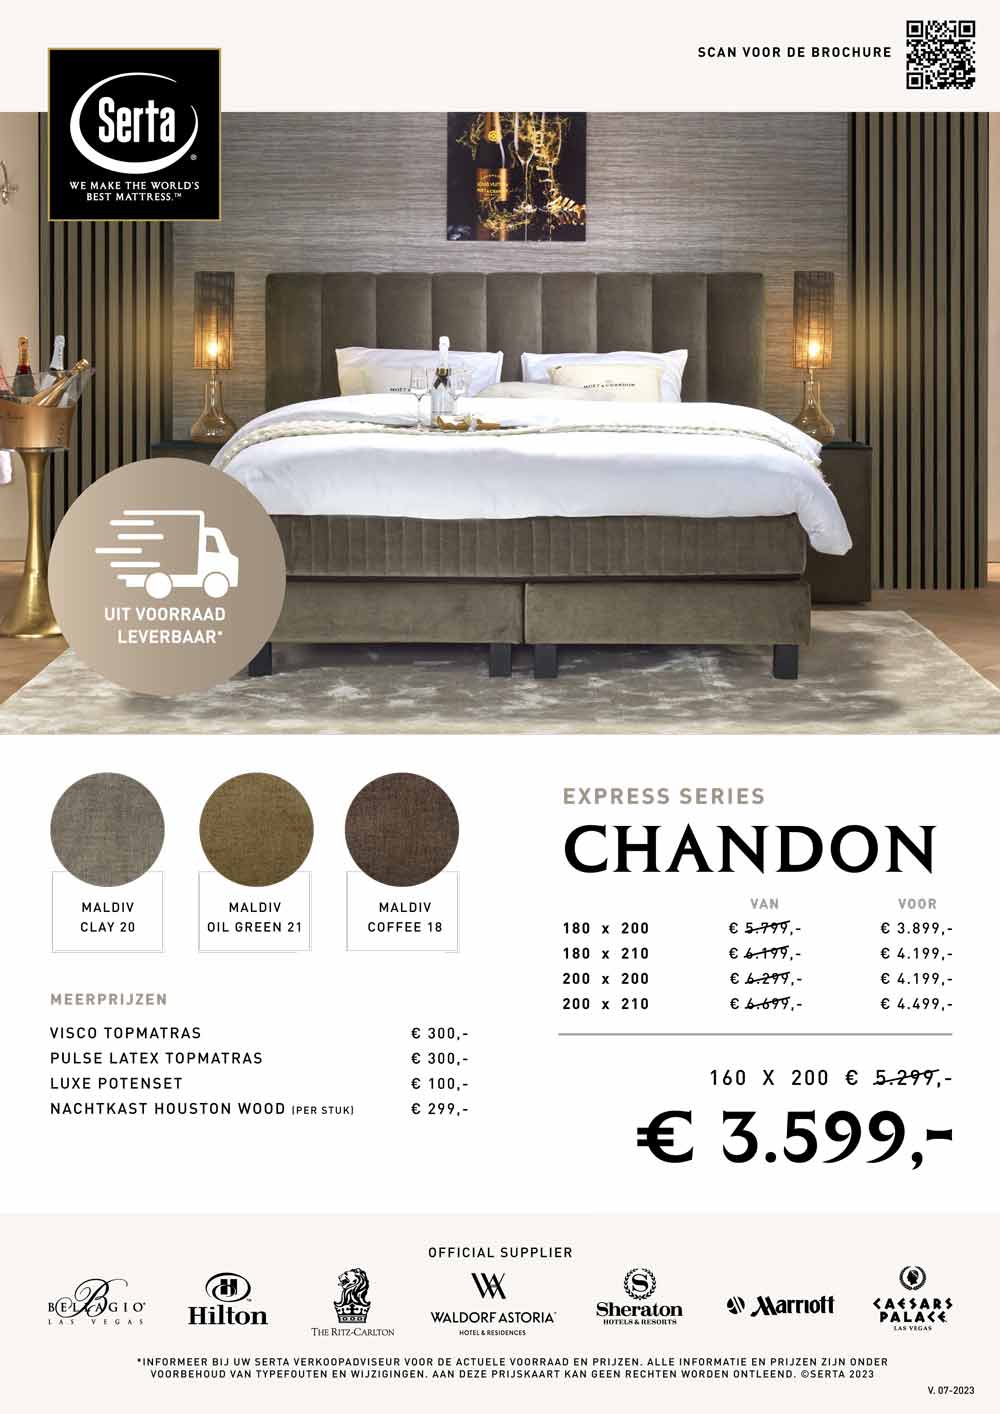 Chandon Limited en Express series Prijskaarten